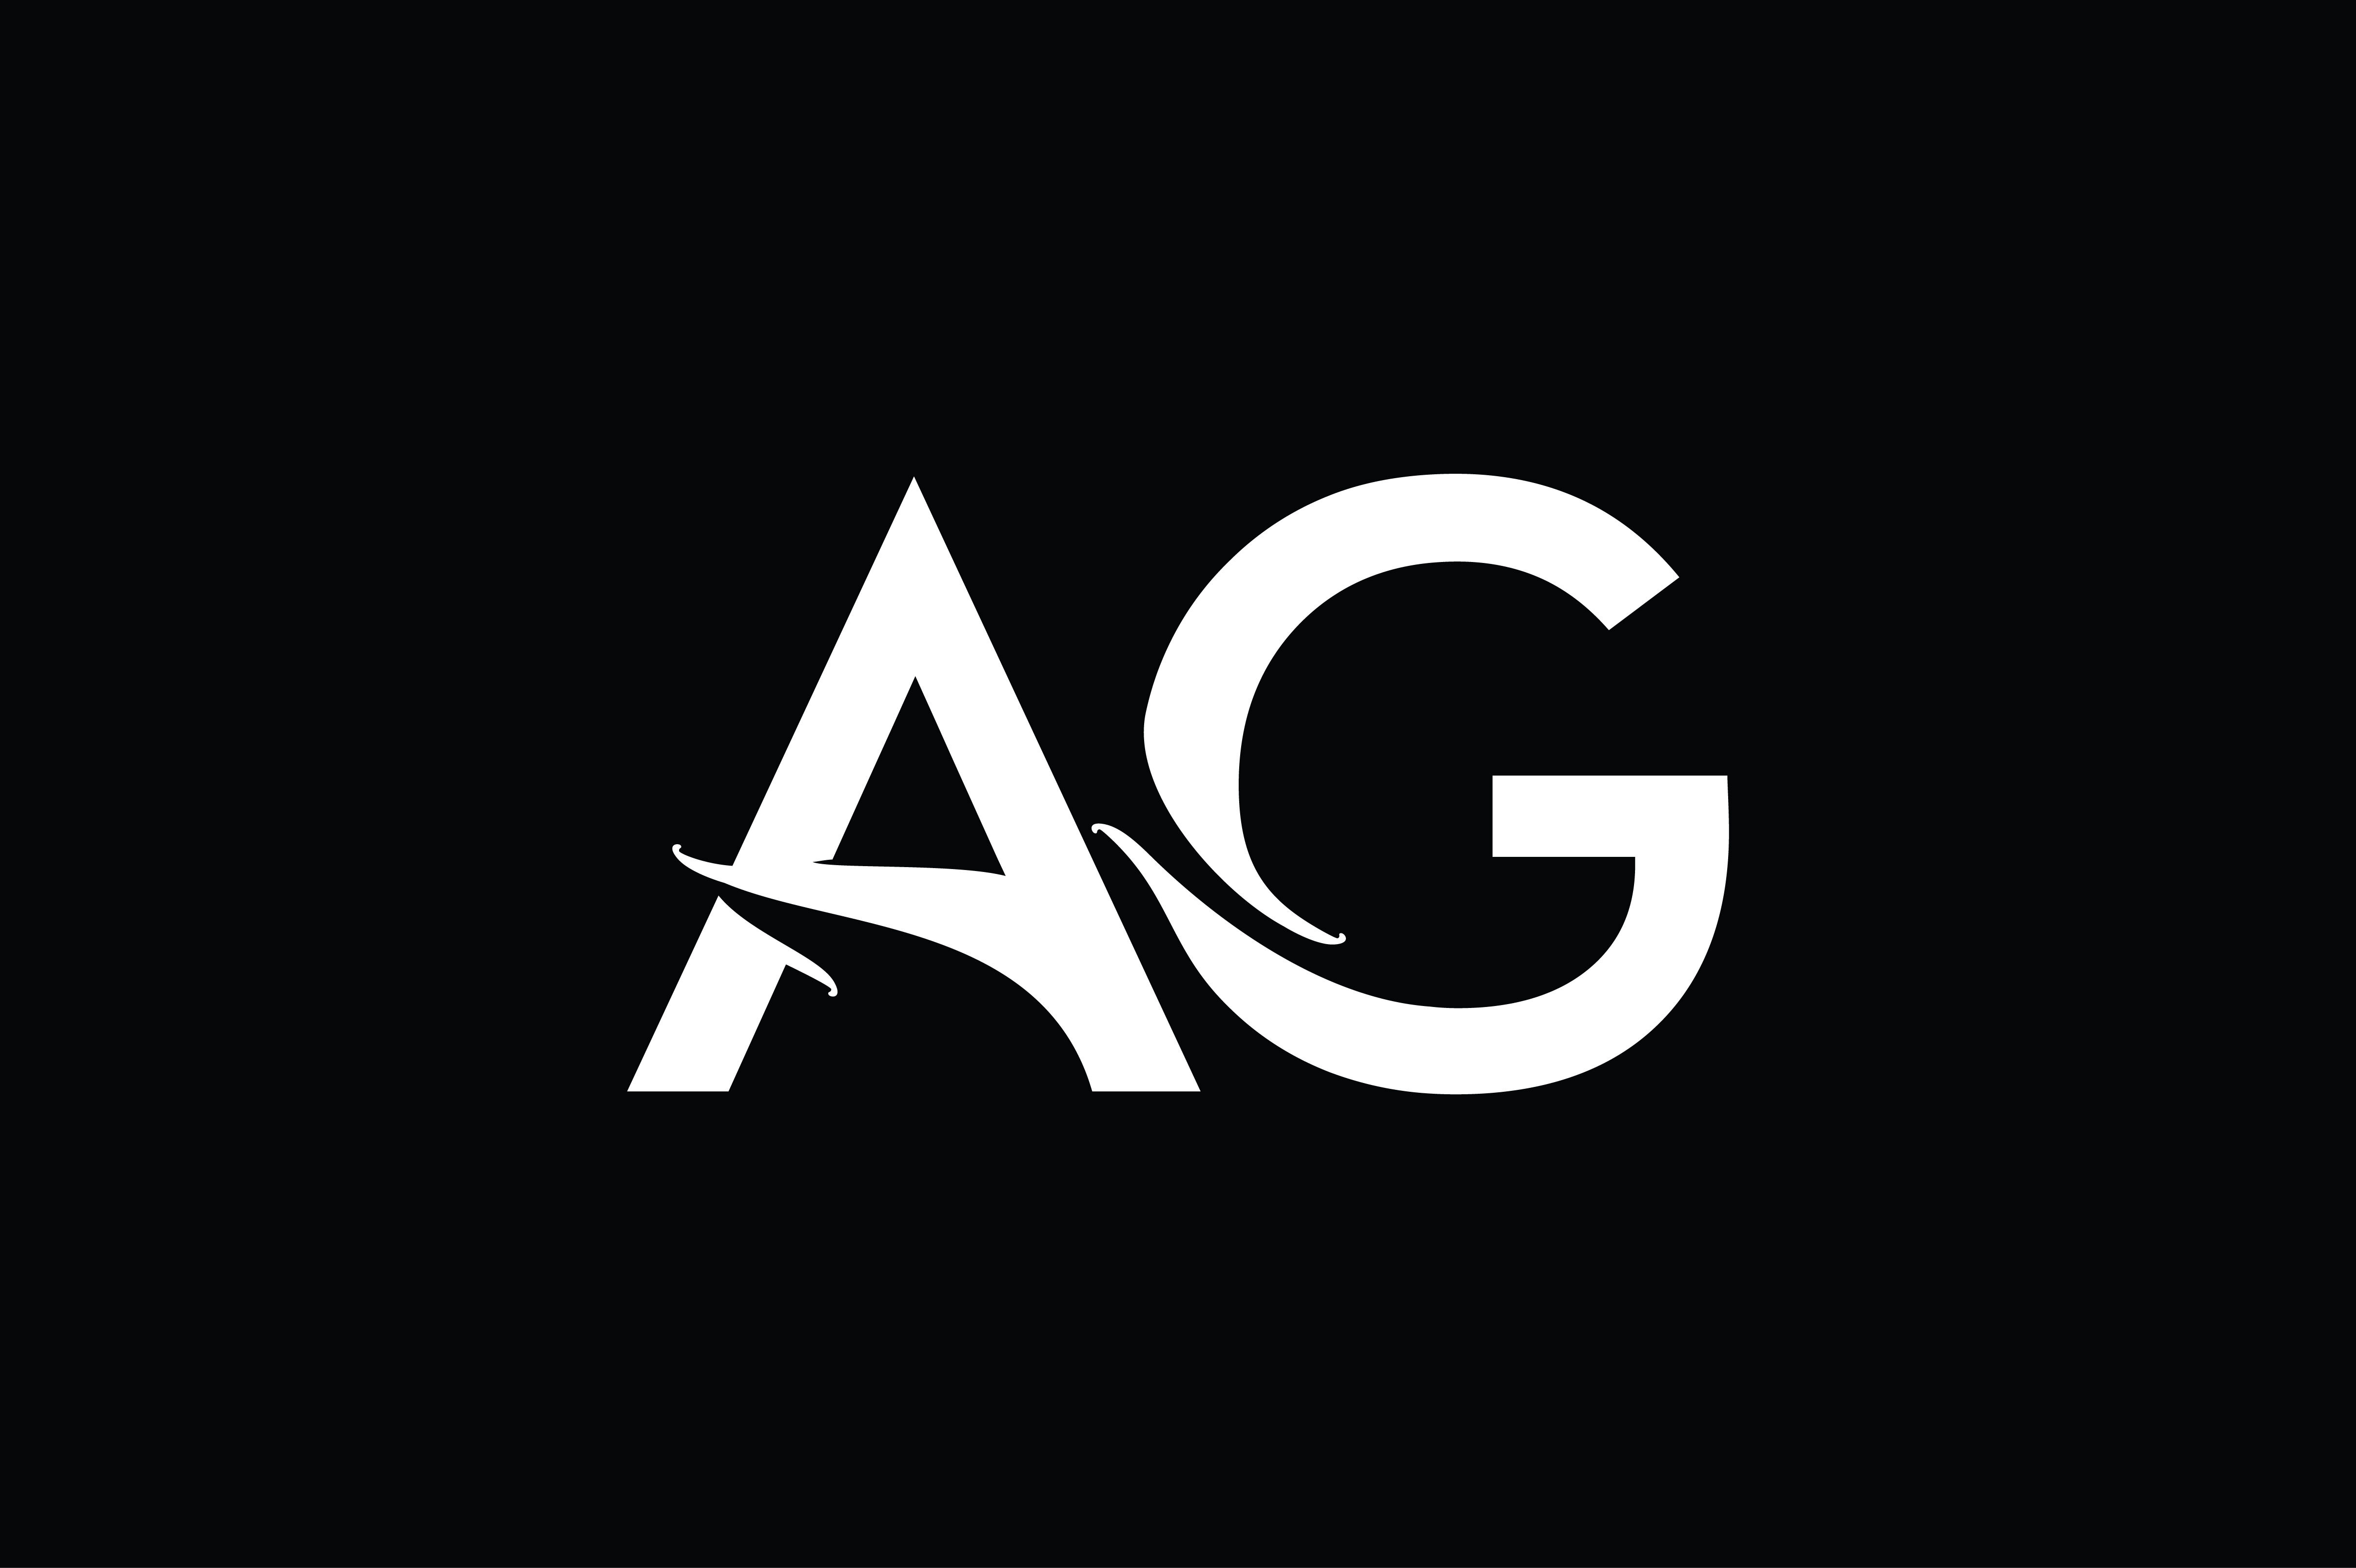 AG | www.totalntertainment.com